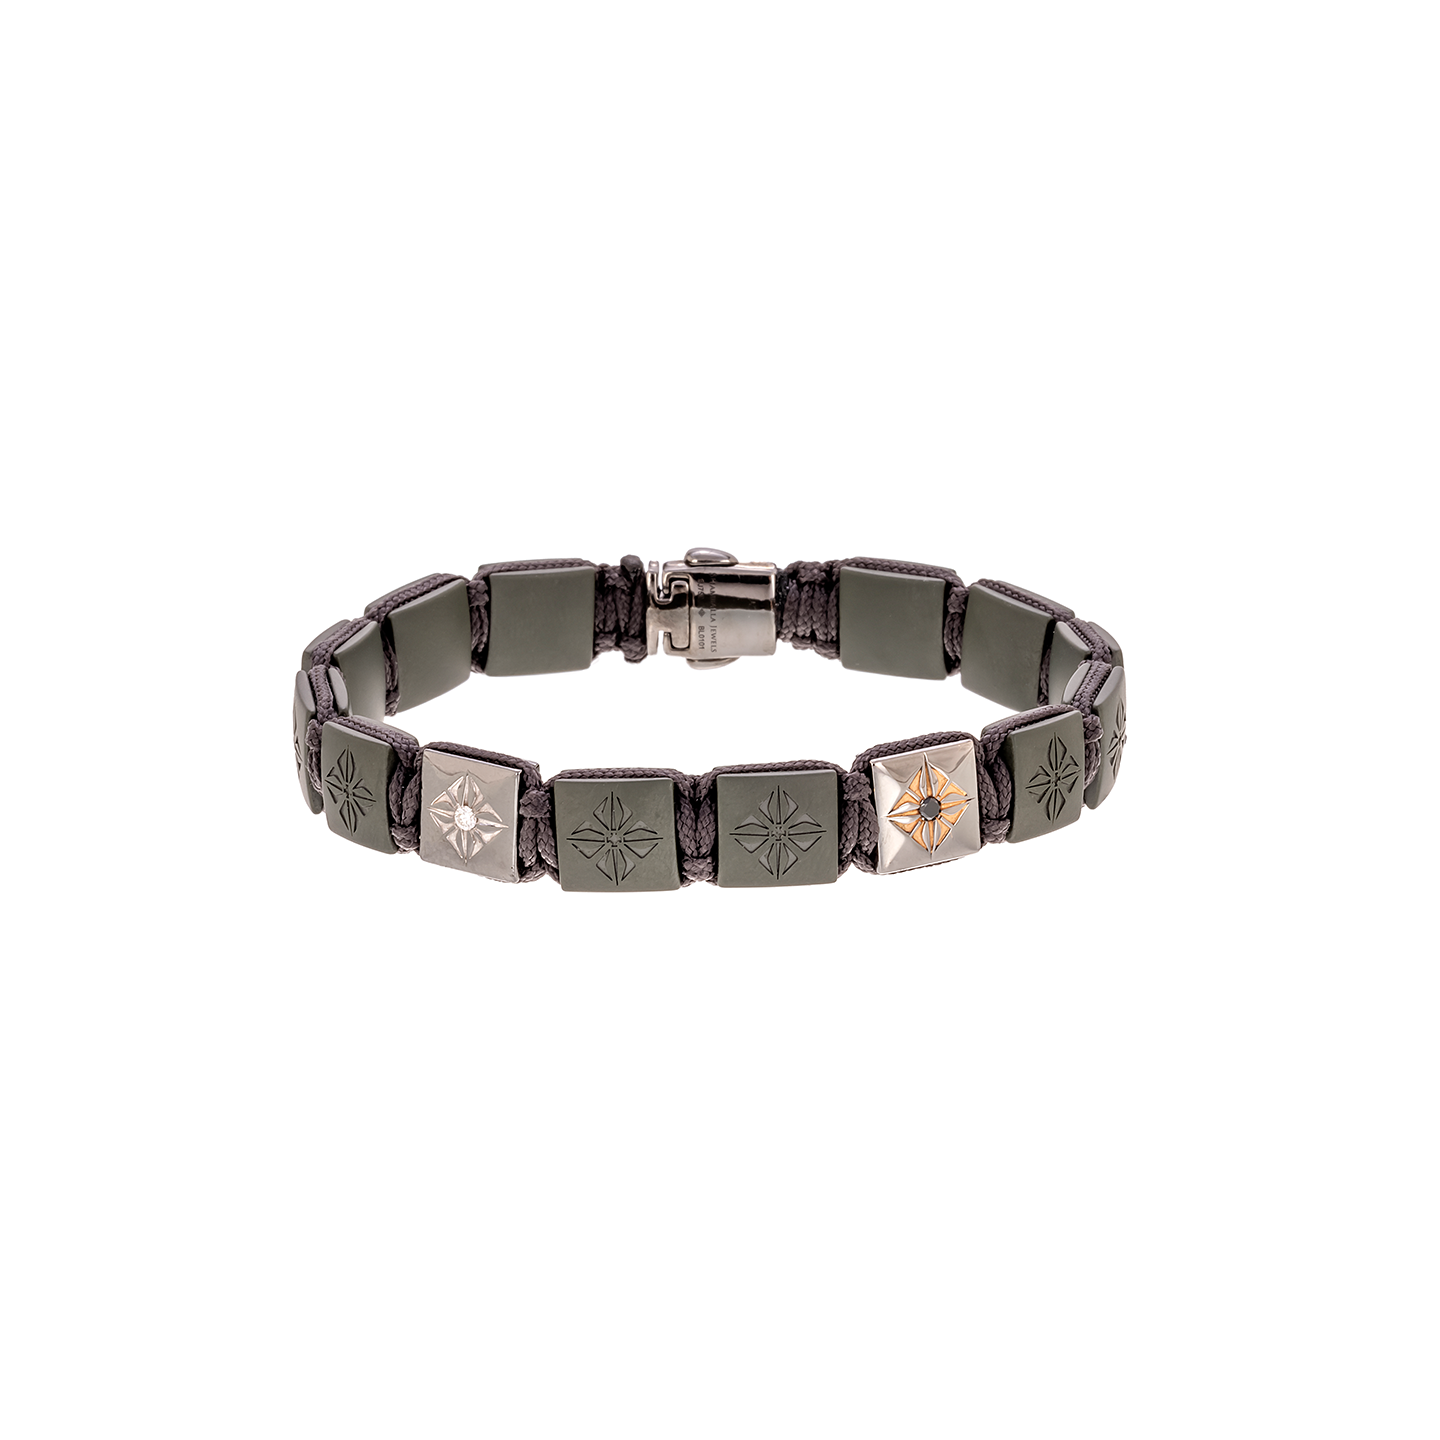 Shamballa Jewels 10mm Lock Bracelet with Matte Green Ceramic Beads on Charcoal Grey Cord